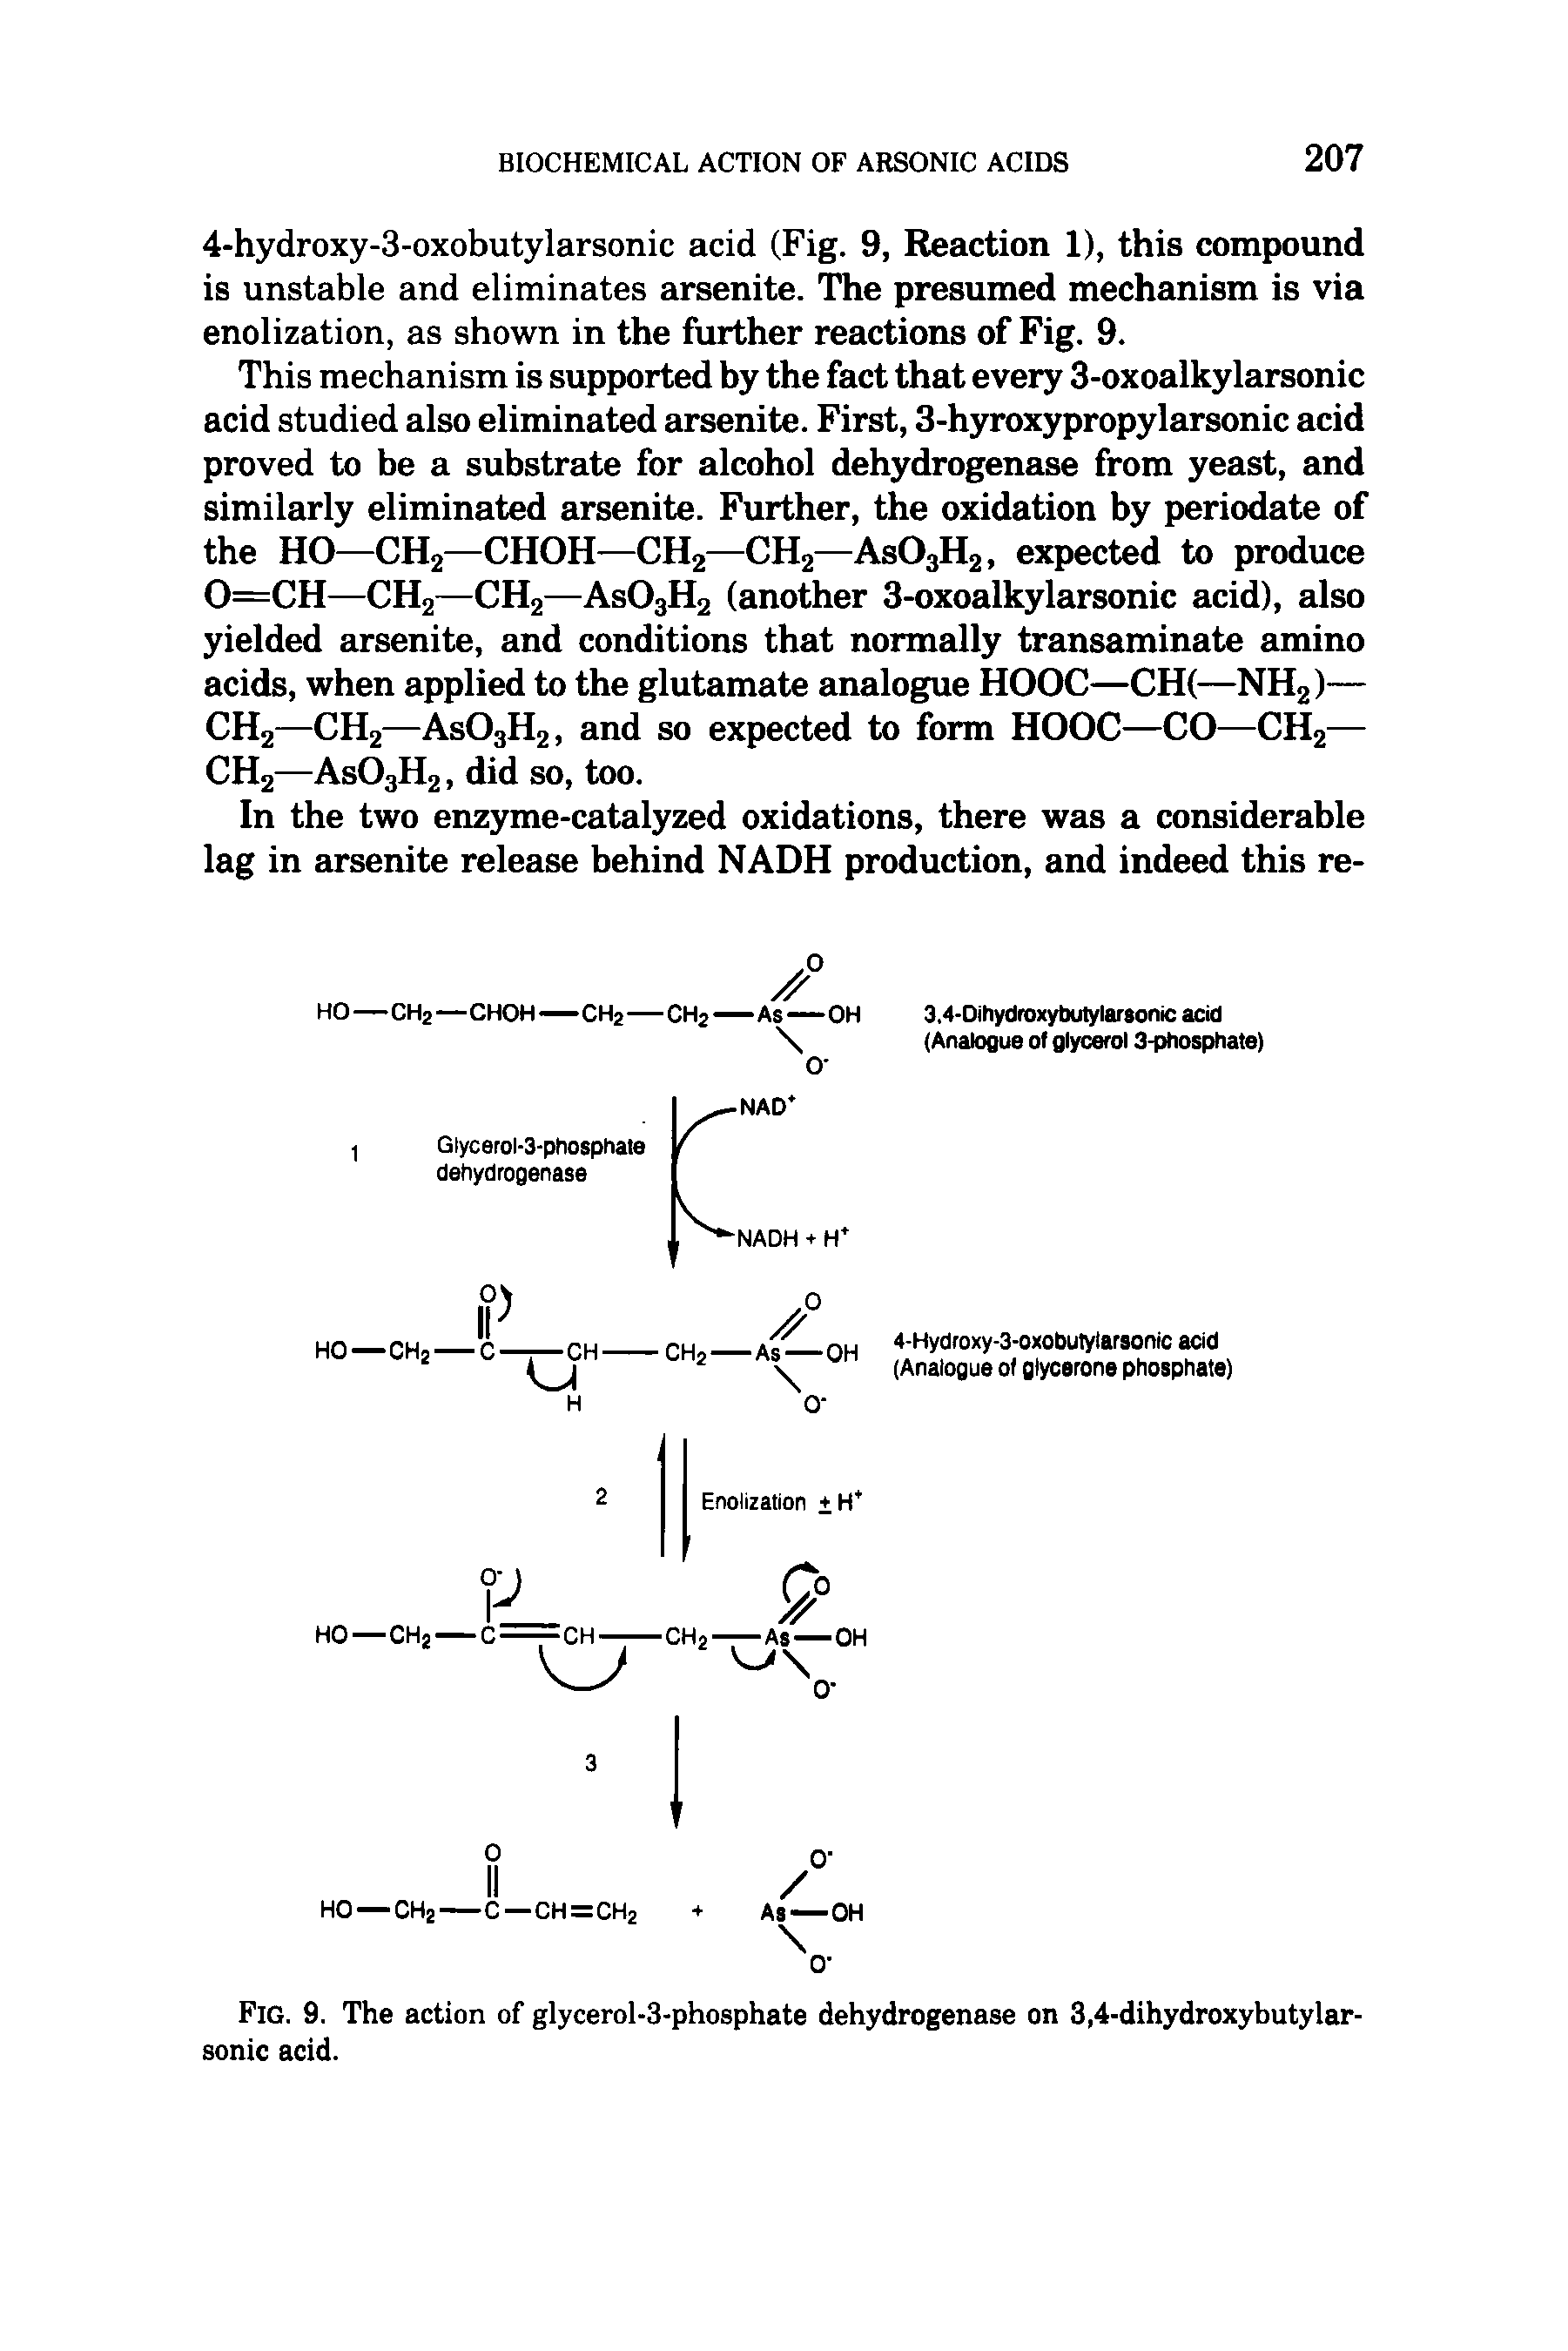 Fig. 9. The action of glycerol-3-phosphate dehydrogenase on 3,4-dihydroxybutylar-sonic acid.